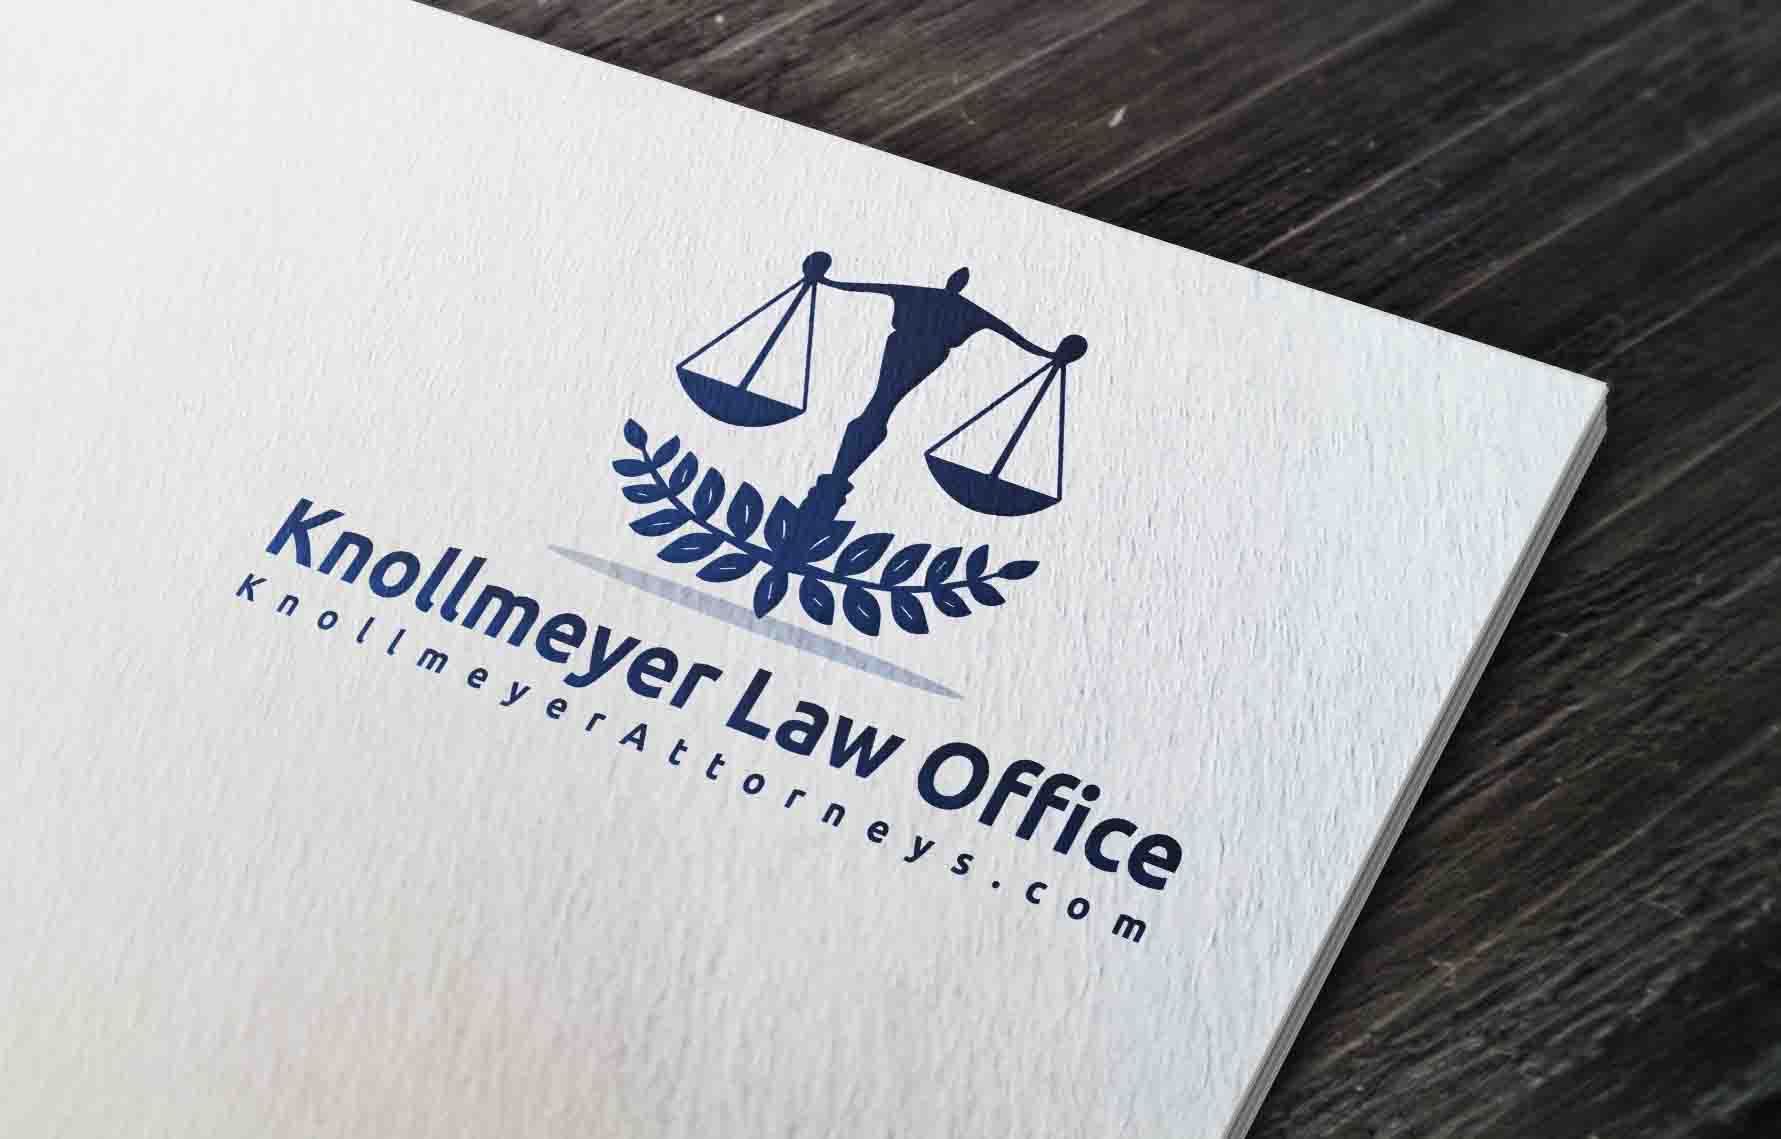 Knollmeyer Law Office